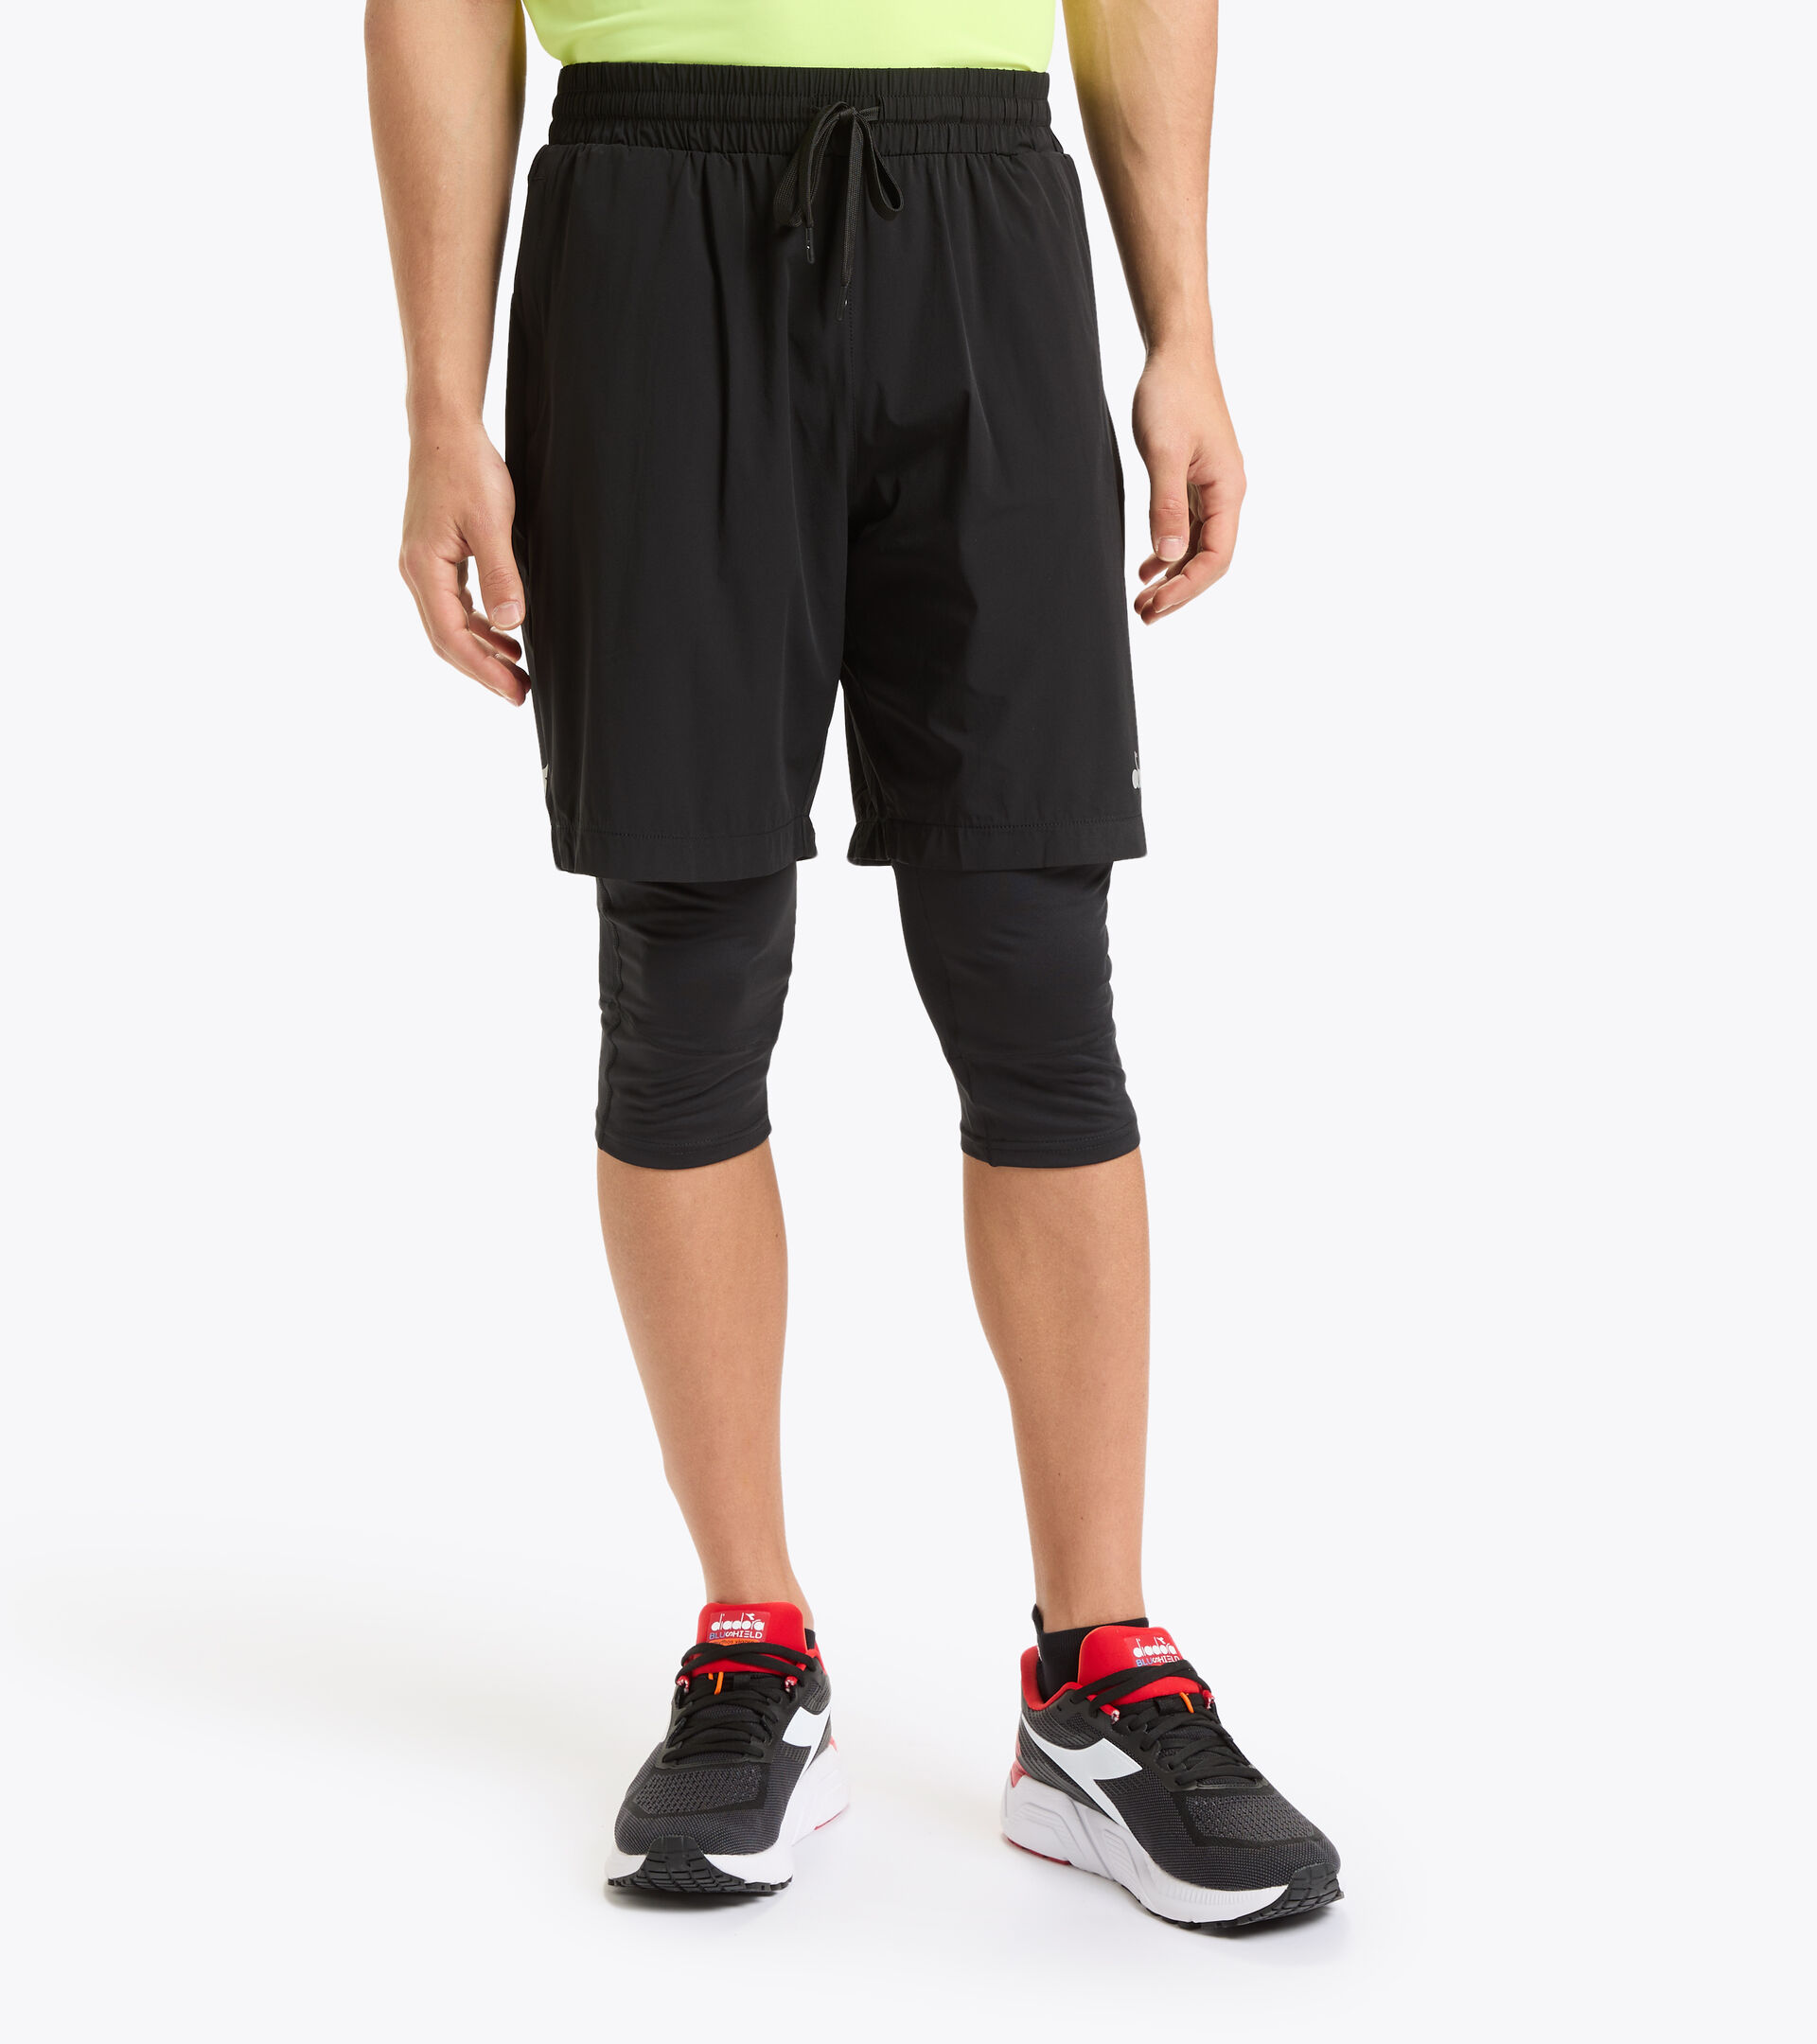 POWER SHORTS BE ONE Leggings with detachable shorts running set - Men -  Diadora Online Store PT